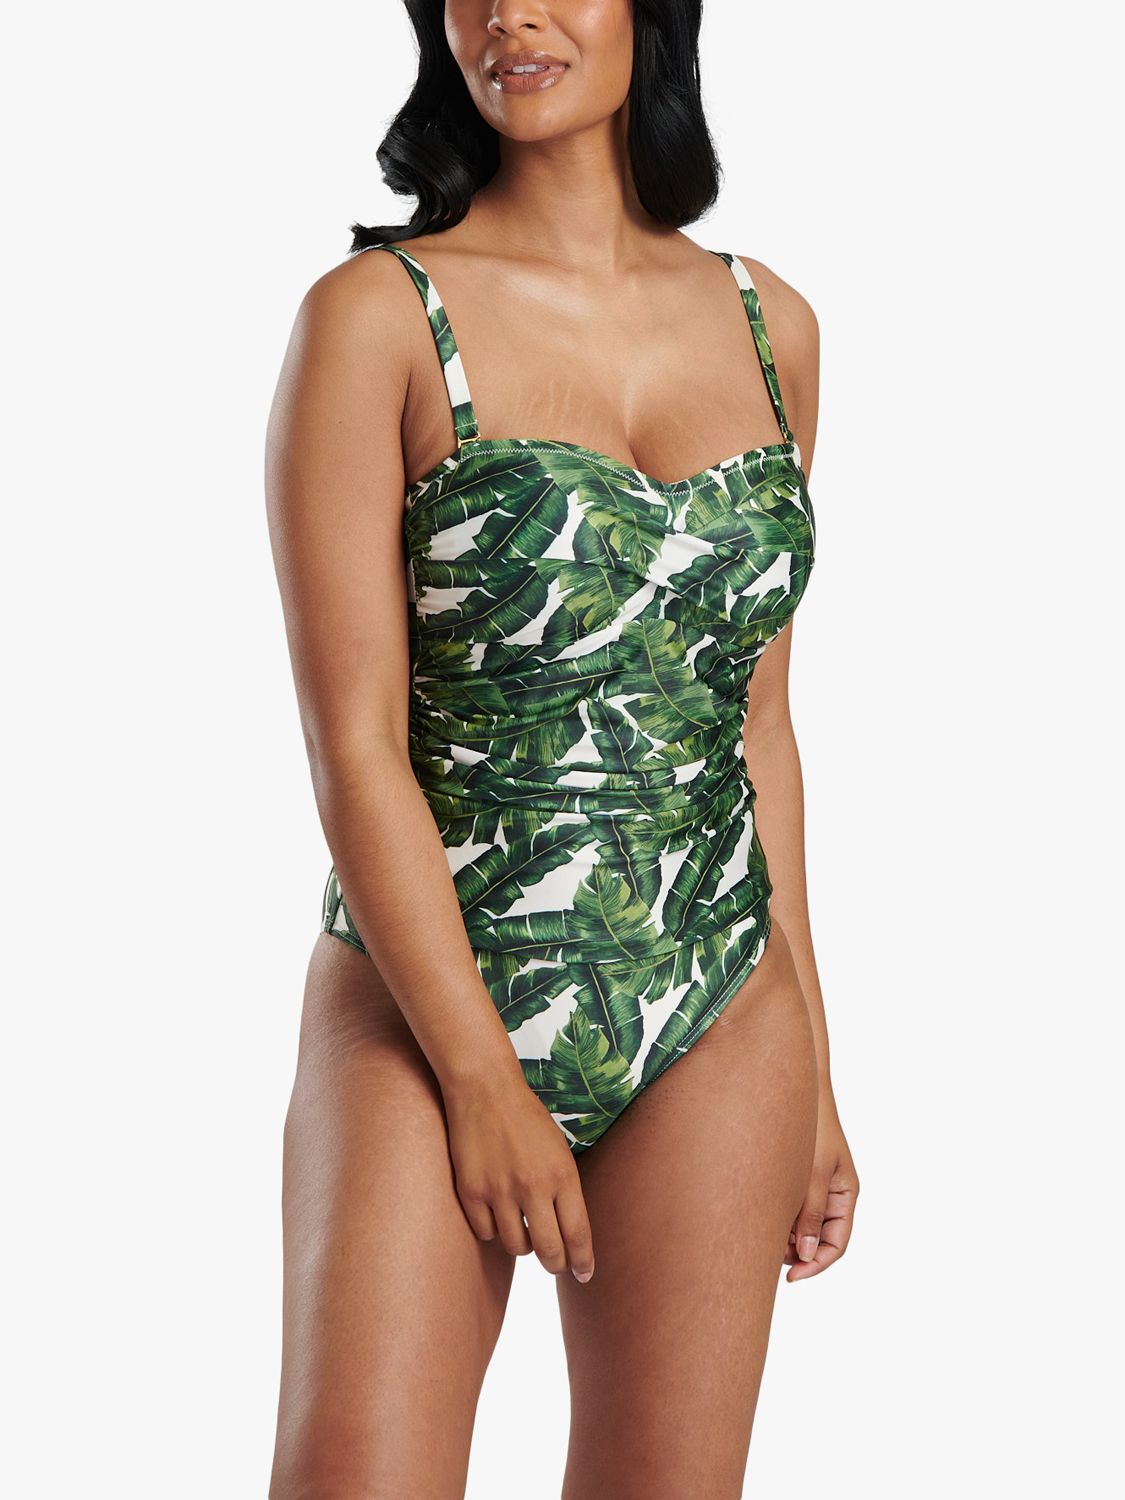 South Beach Leaf Print Twist Top Swimsuit, Green/Multi, 14